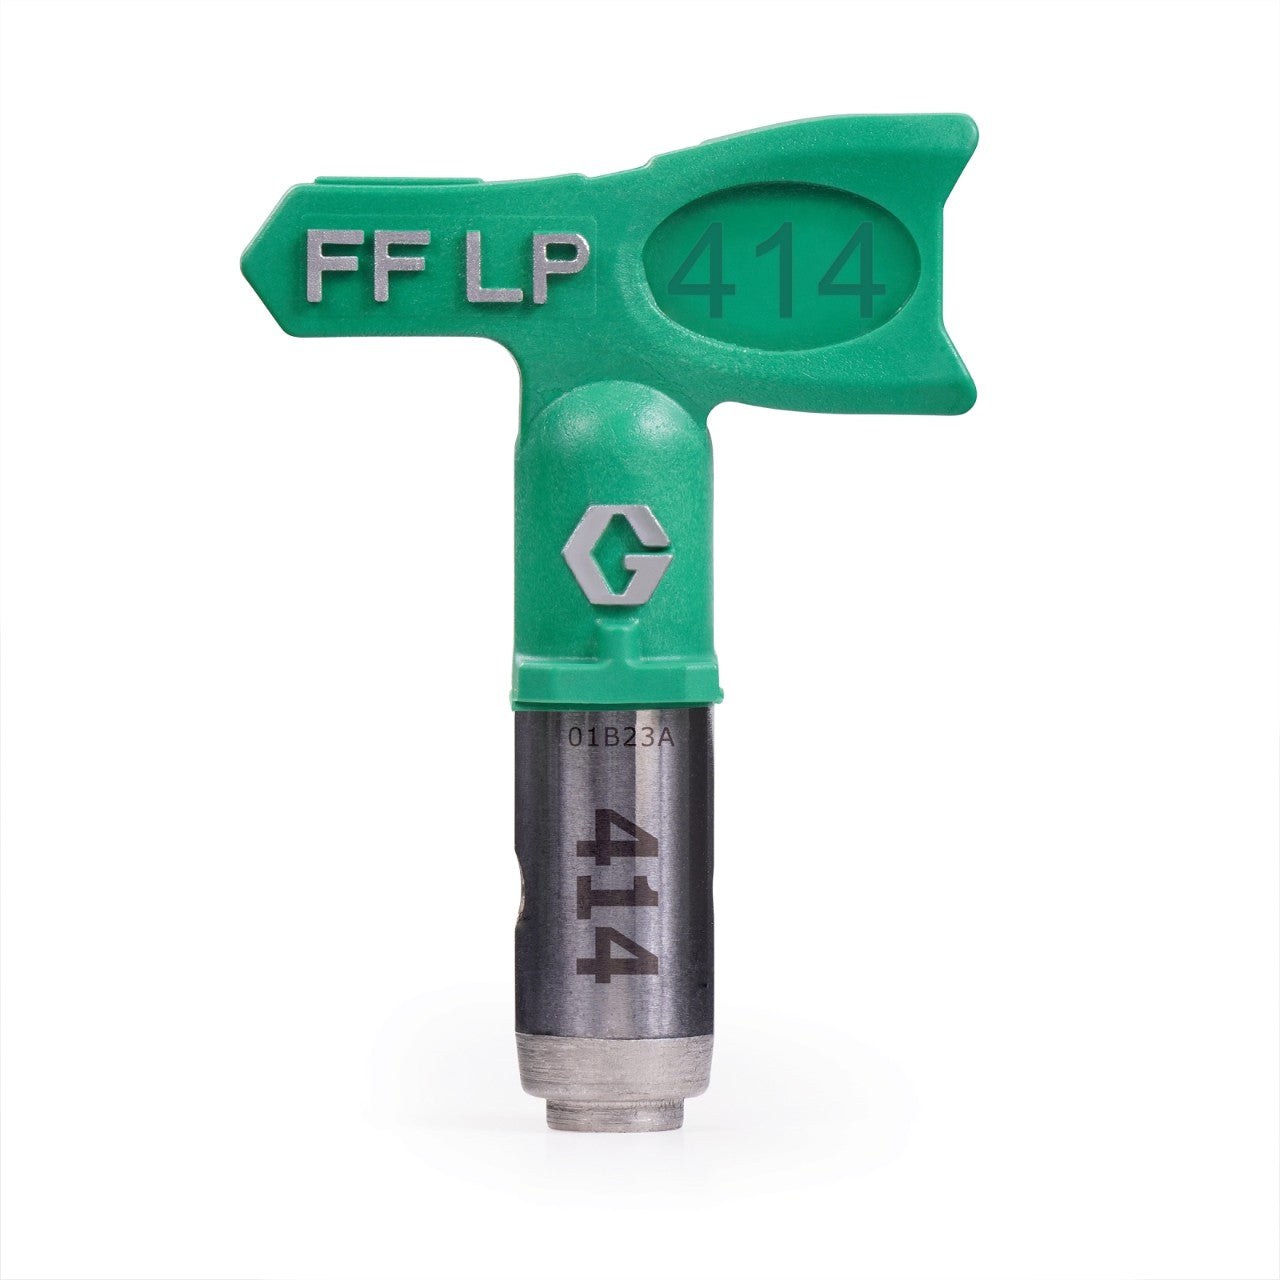 Graco FFLP-414 Tip